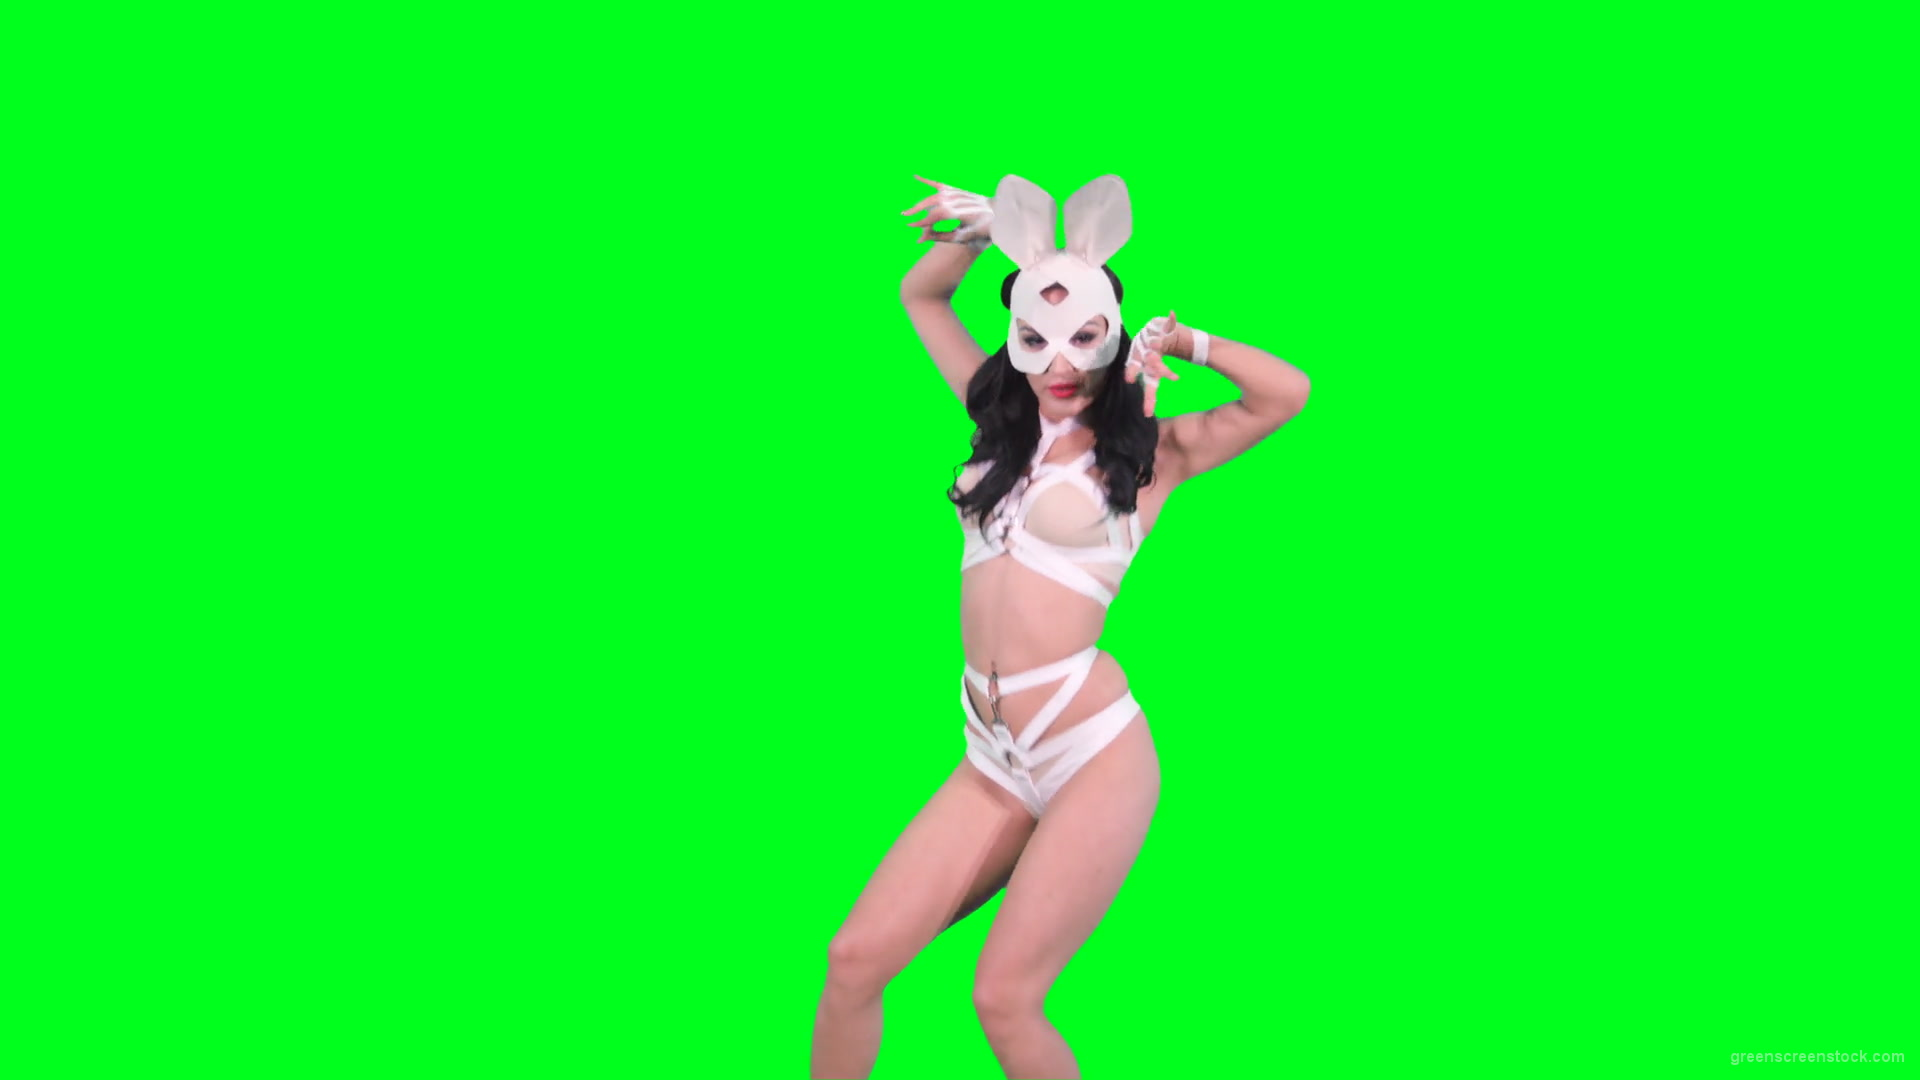 Green-Srcreen-Girl-in-rabbit-costume-sending-air-kiss-4k-Video-Footage-1920_007 Green Screen Stock